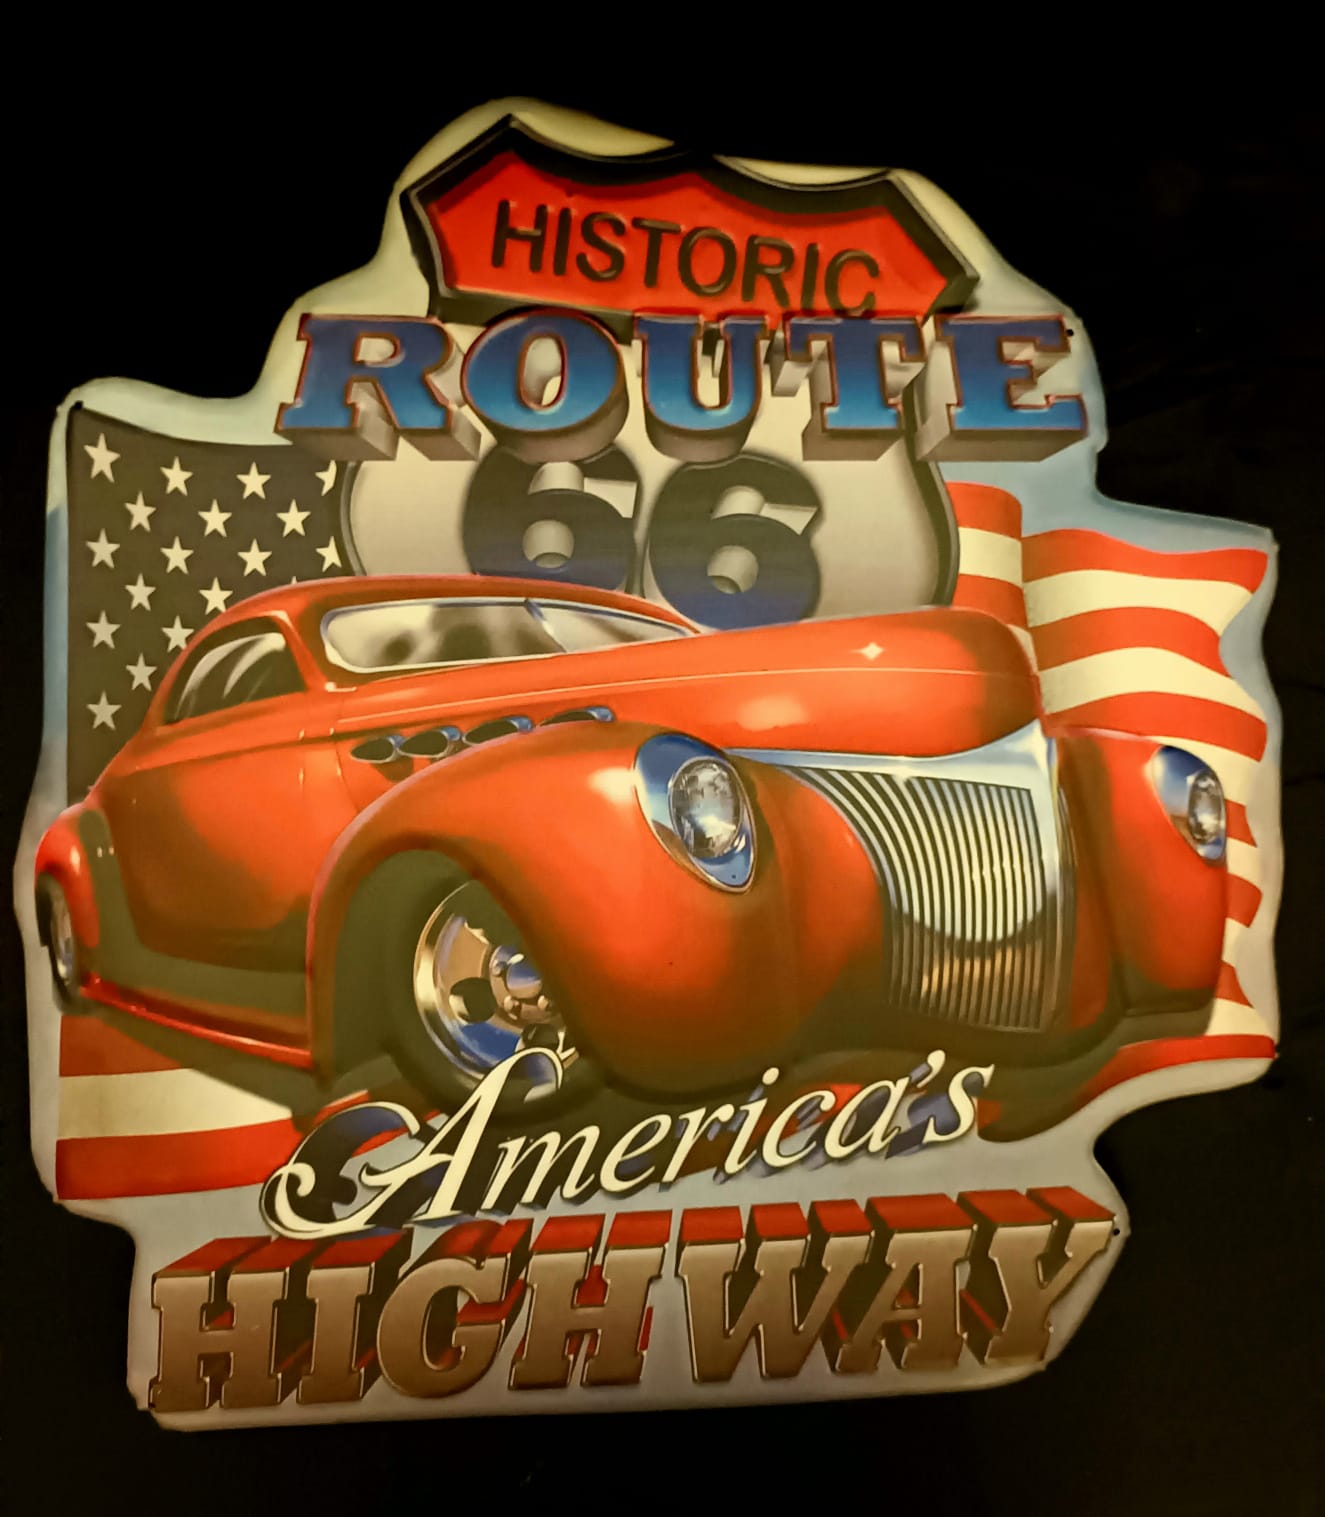 Blechschild "Historic Route 66 Americas Highway"